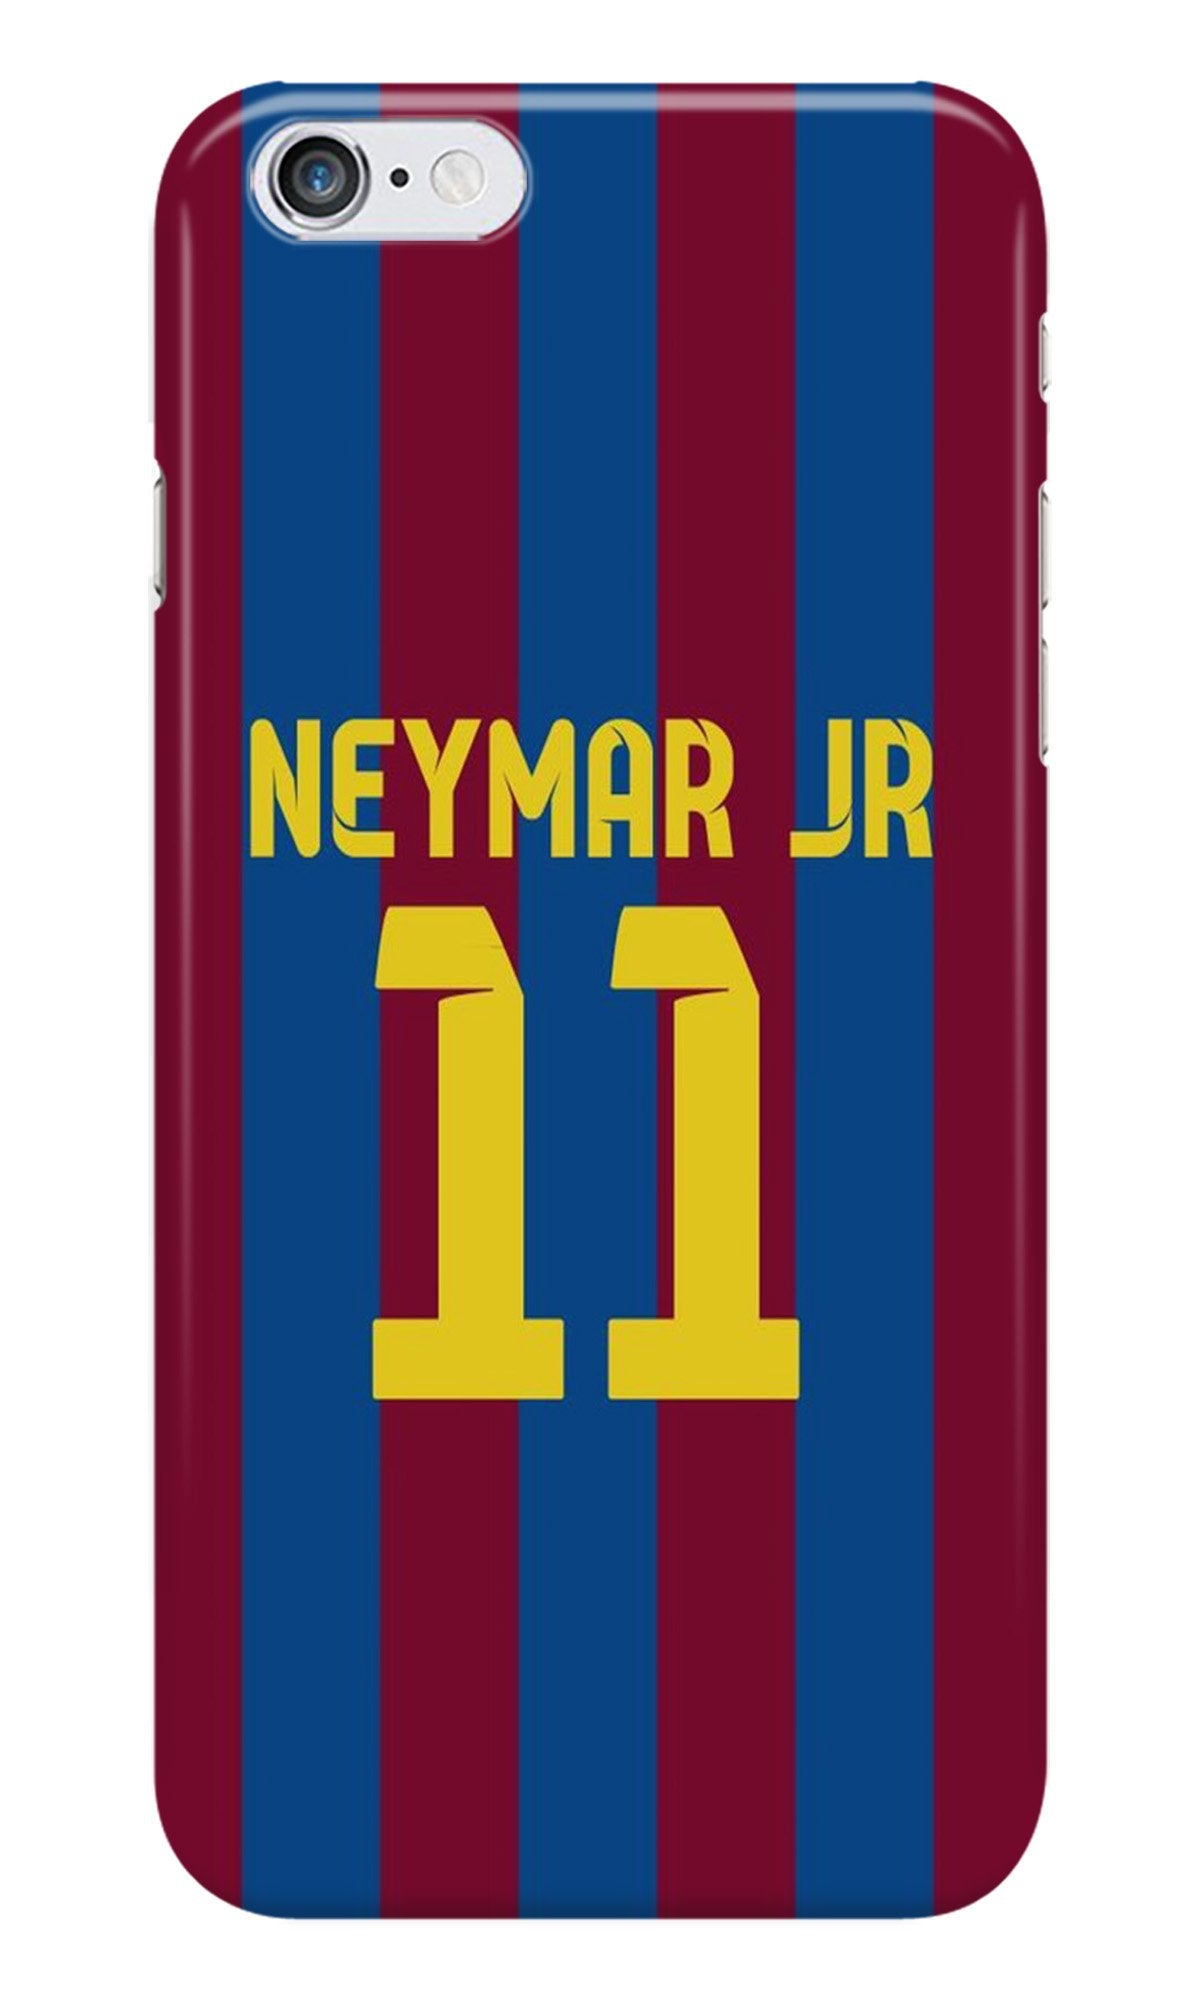 Neymar Jr Case for iPhone 6/ 6s(Design - 162)